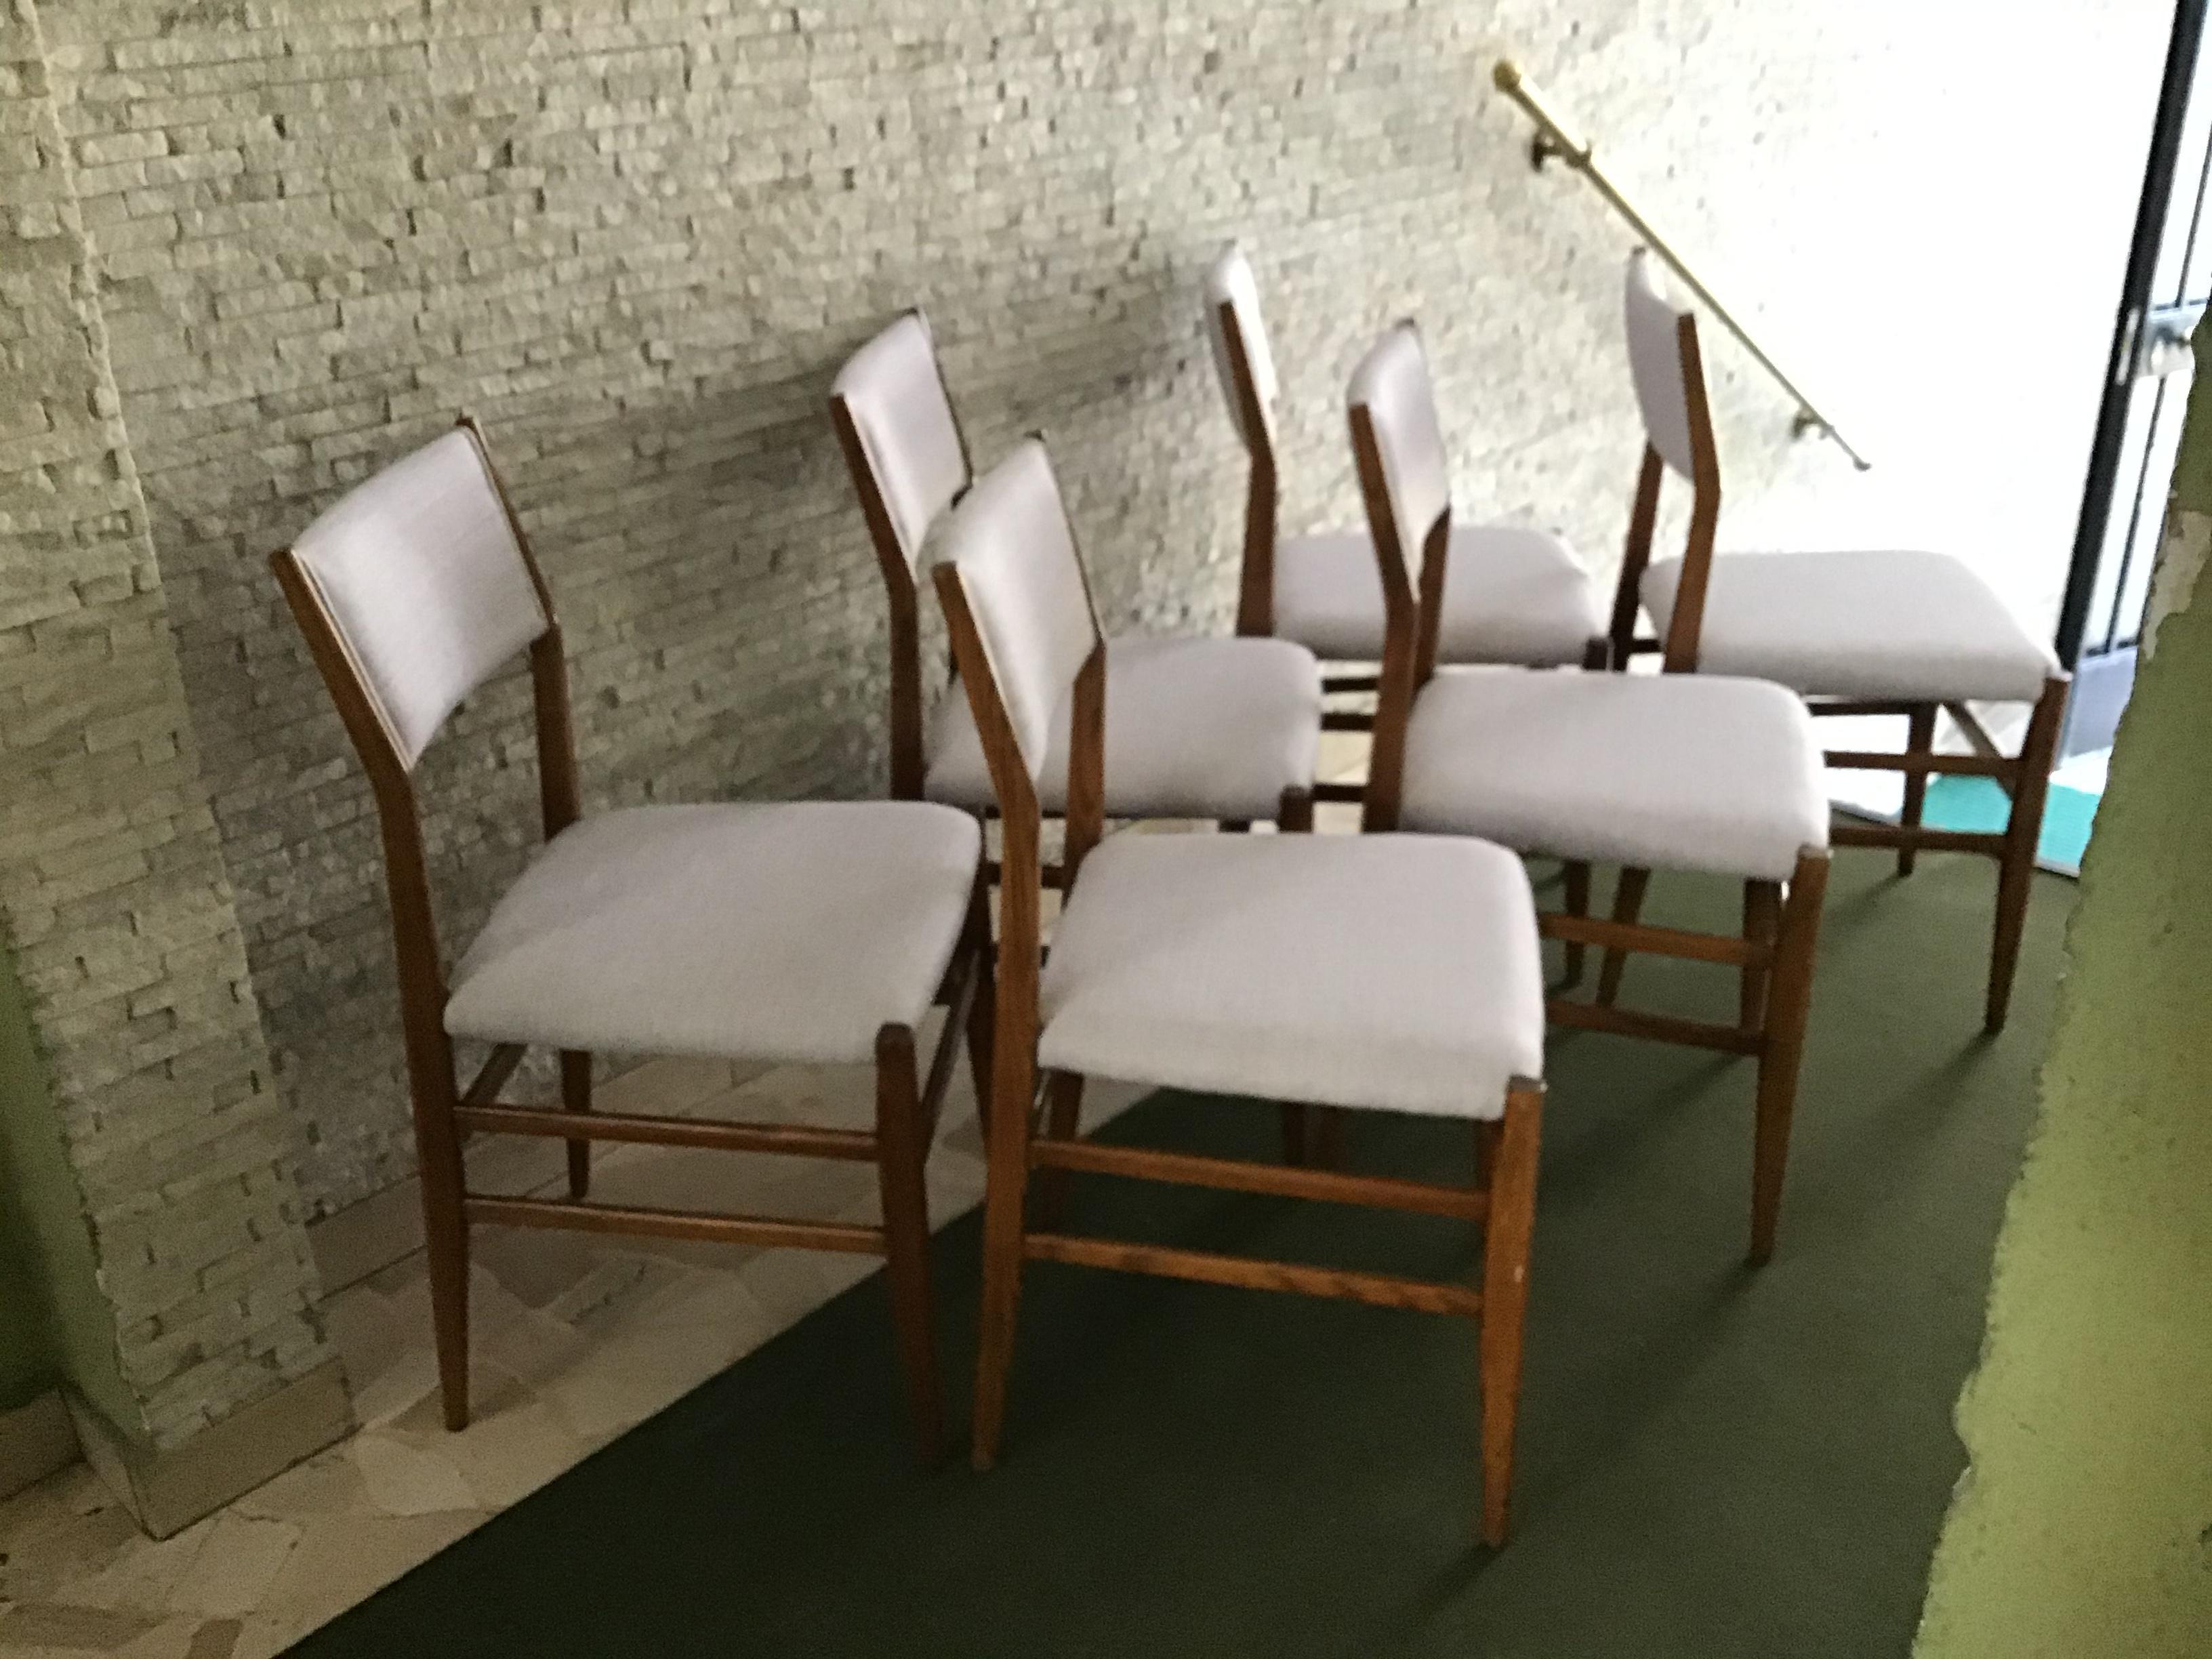 Set of 6 Gio Ponti upholstered chairs “Leggera” model 646 wood, 1950, Italy.